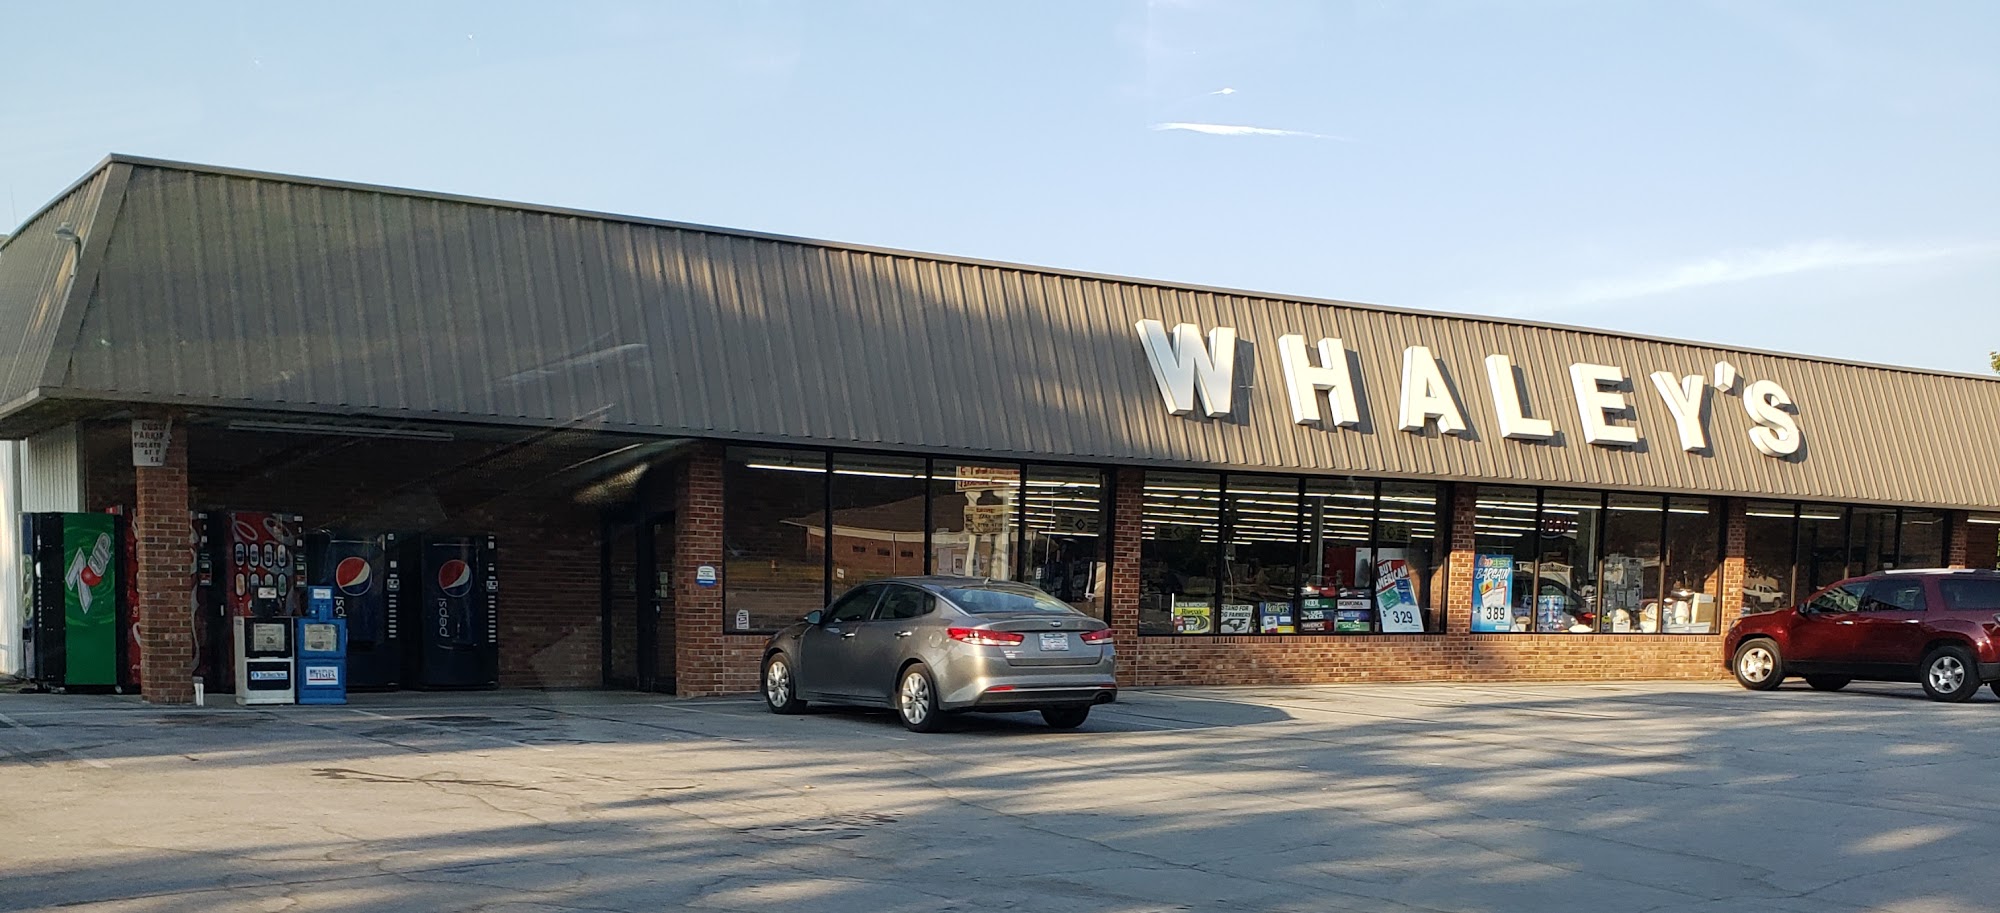 Whaley's Super Market